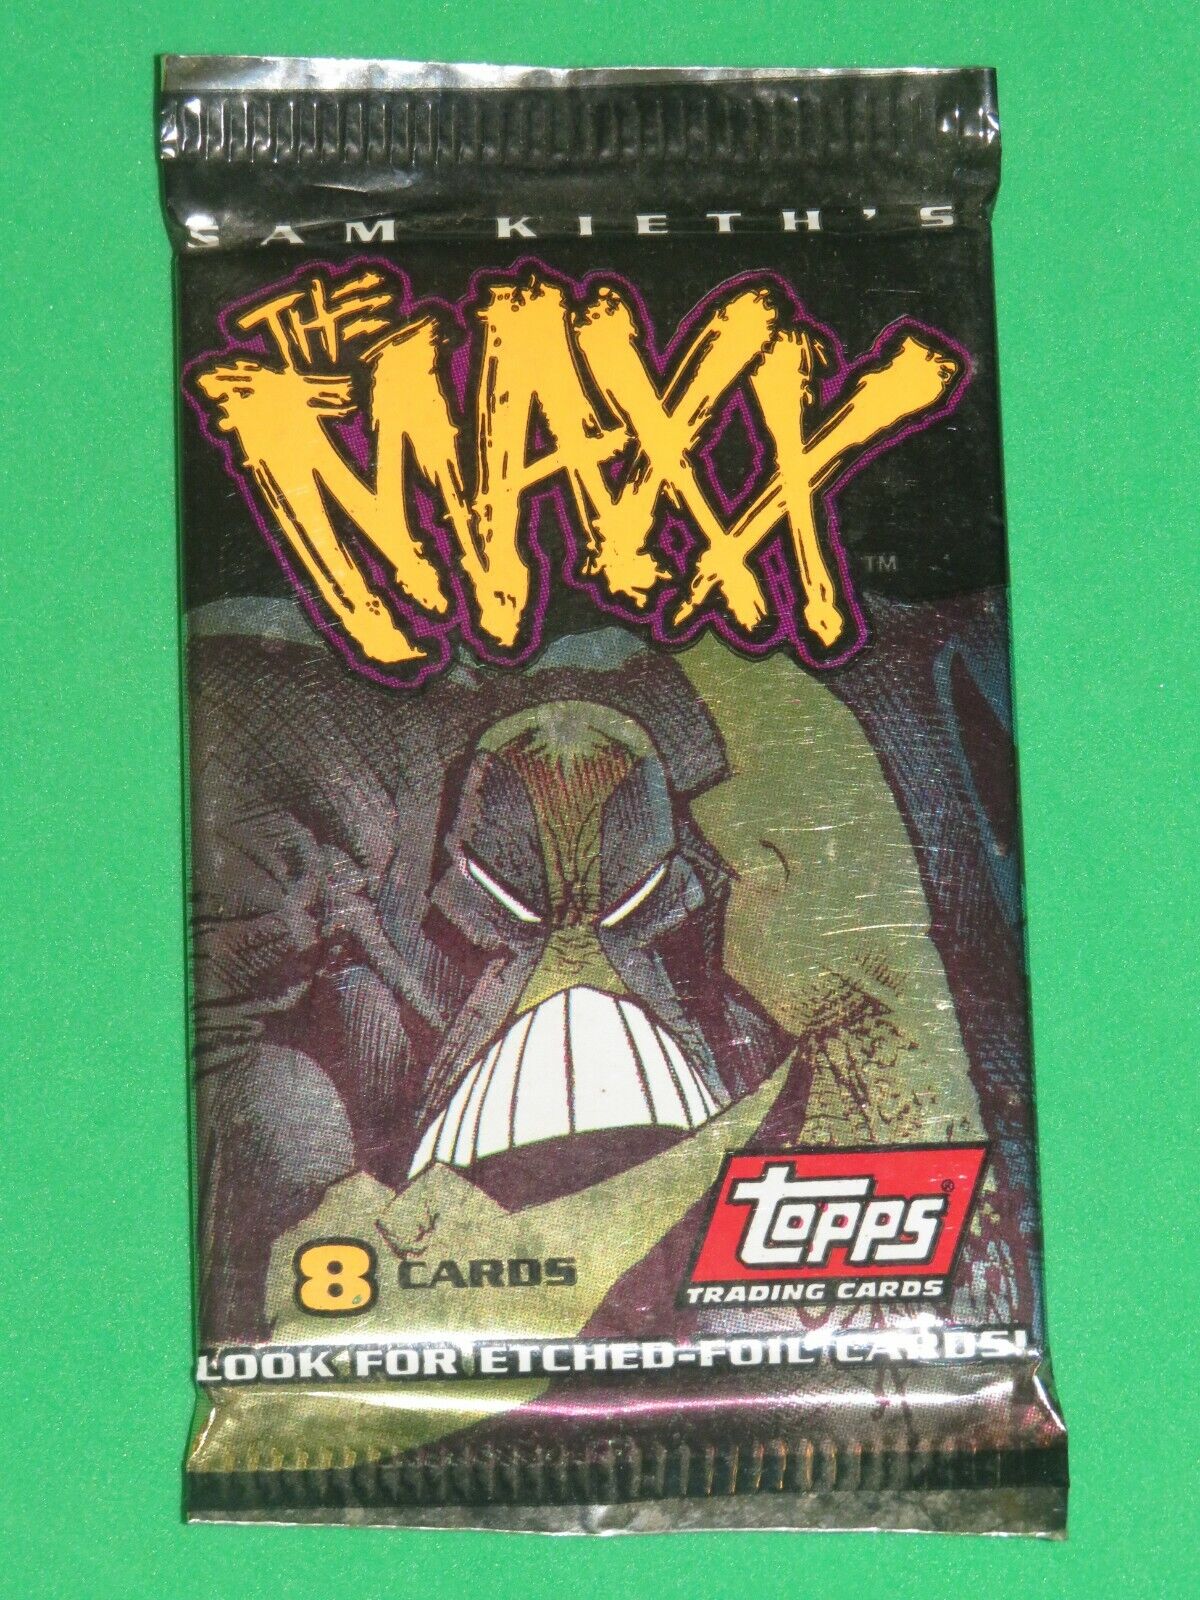 1993 THE MAXX UNOPENED 8 CARD PACK ETCHED-FOIL SAM KIETH MR NOBODY JULIE MTV